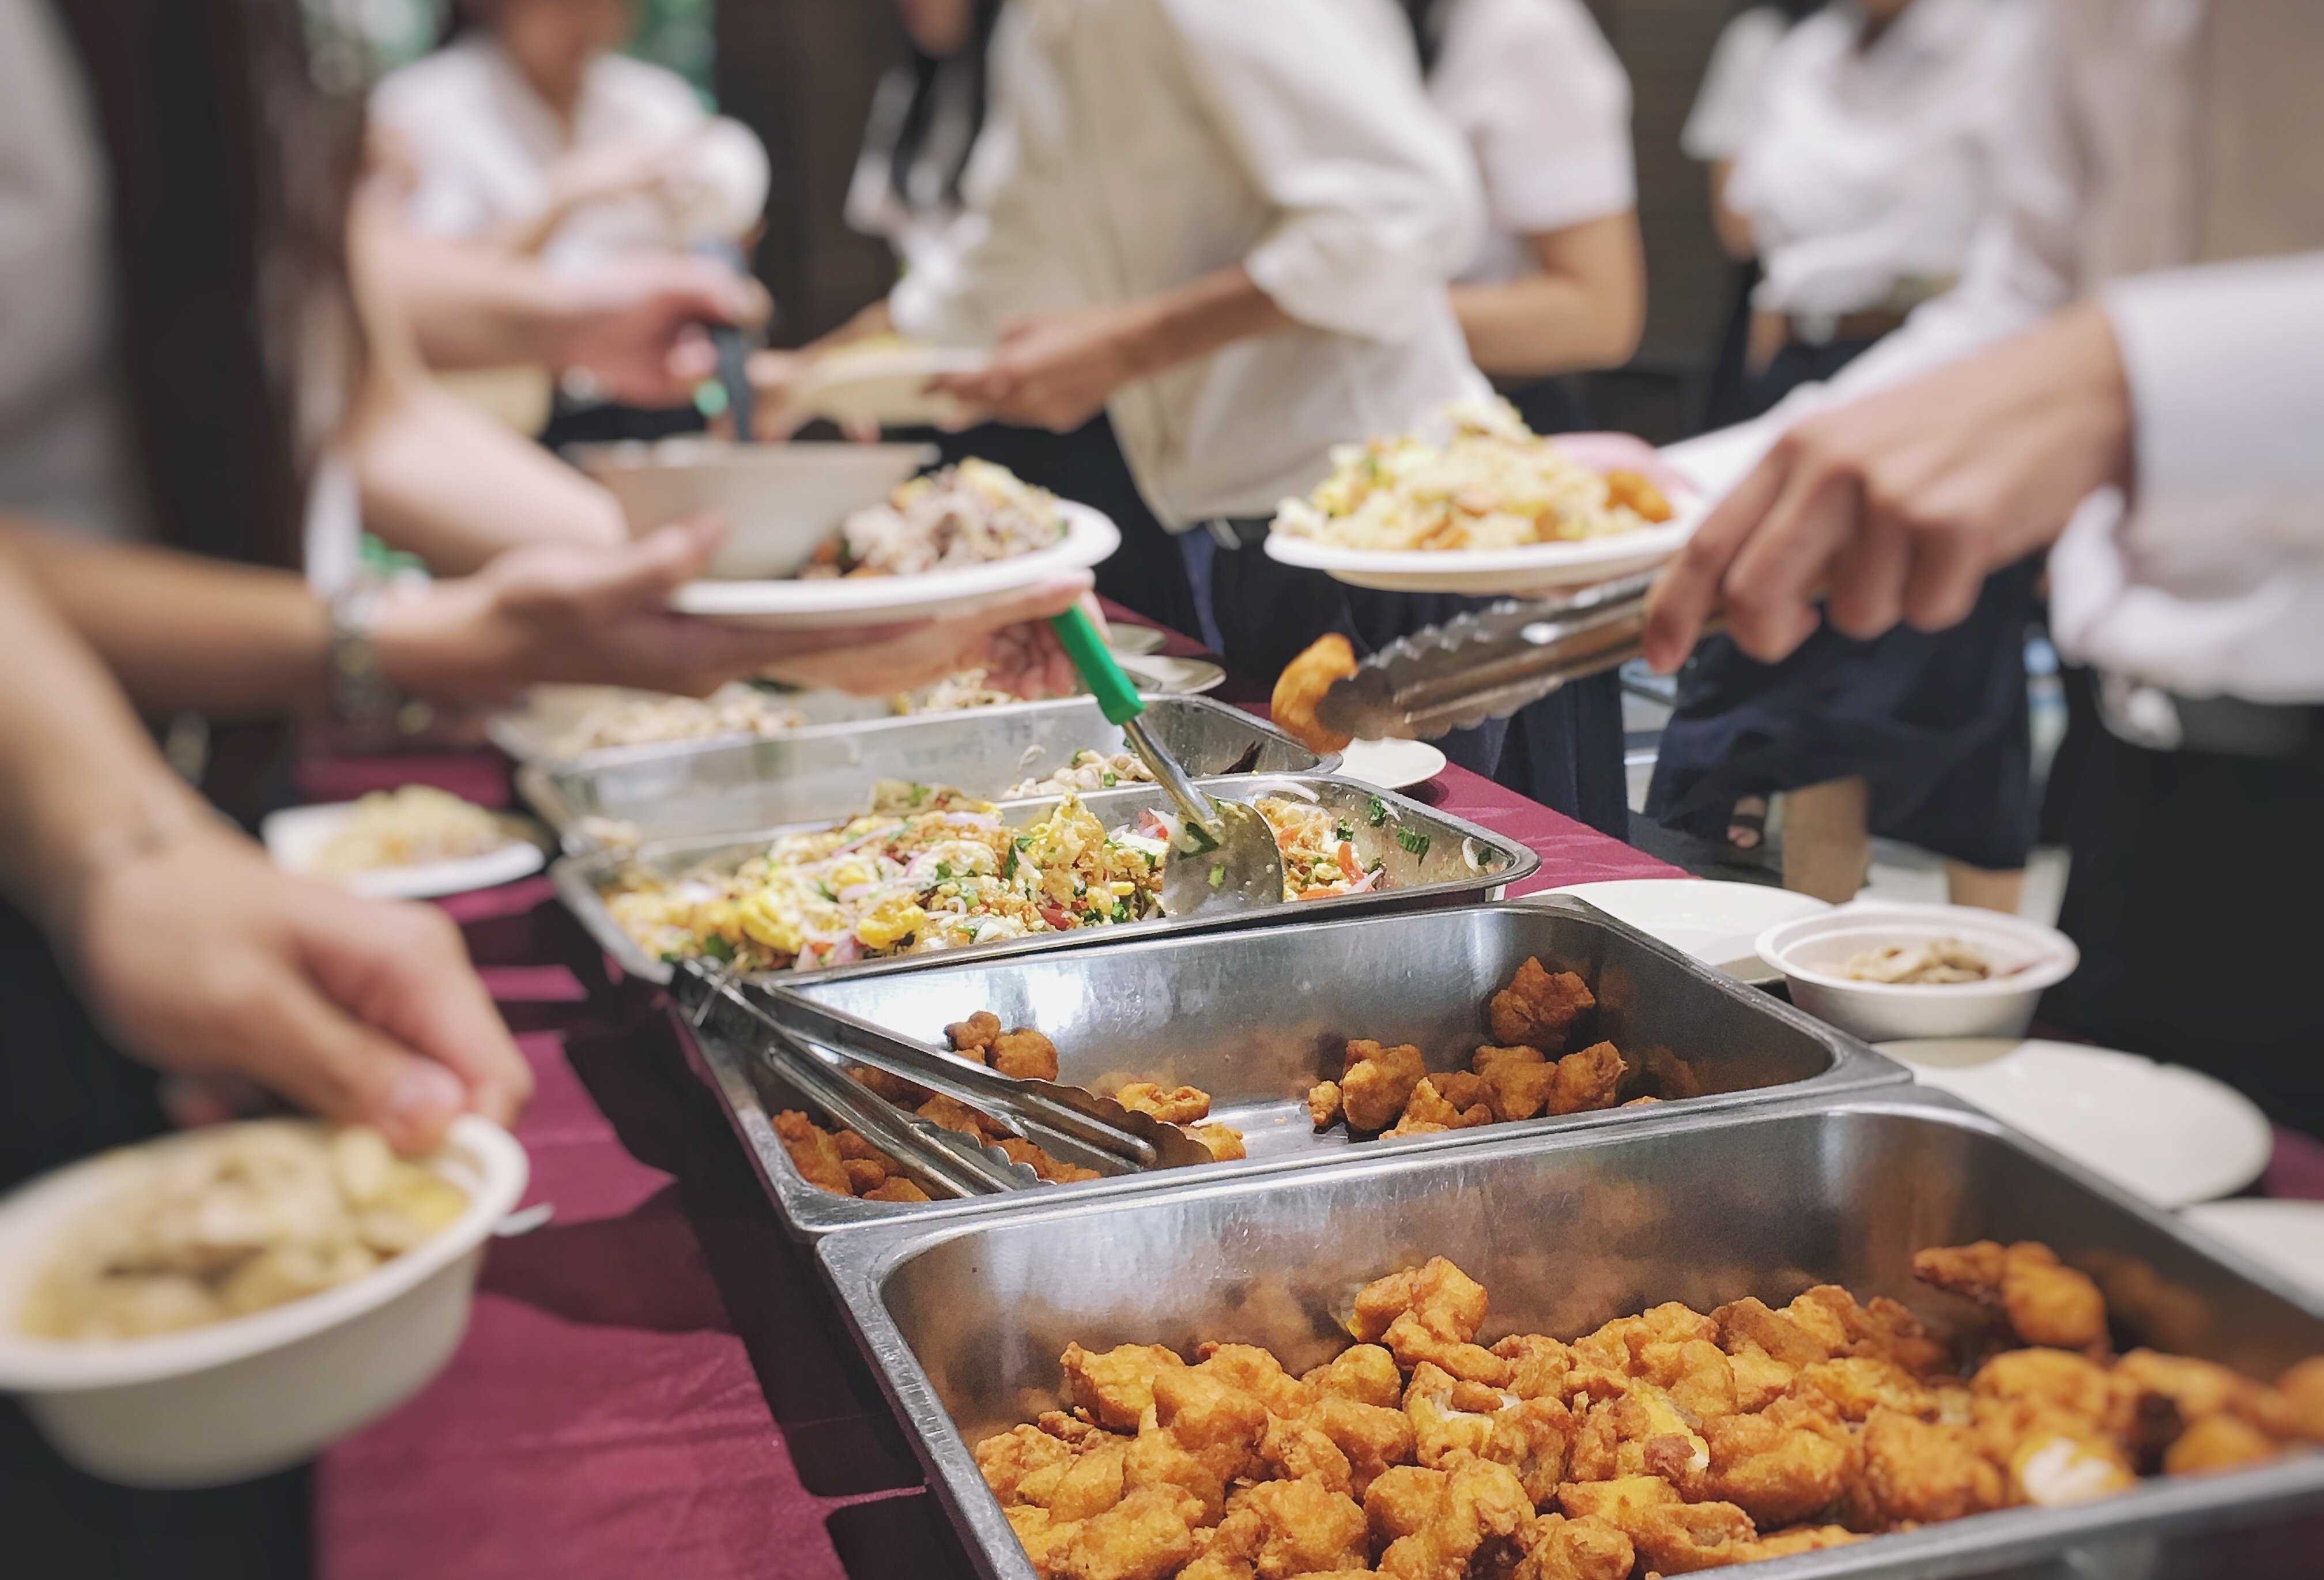 Contract catering sales still below 2019 levels, report reveals